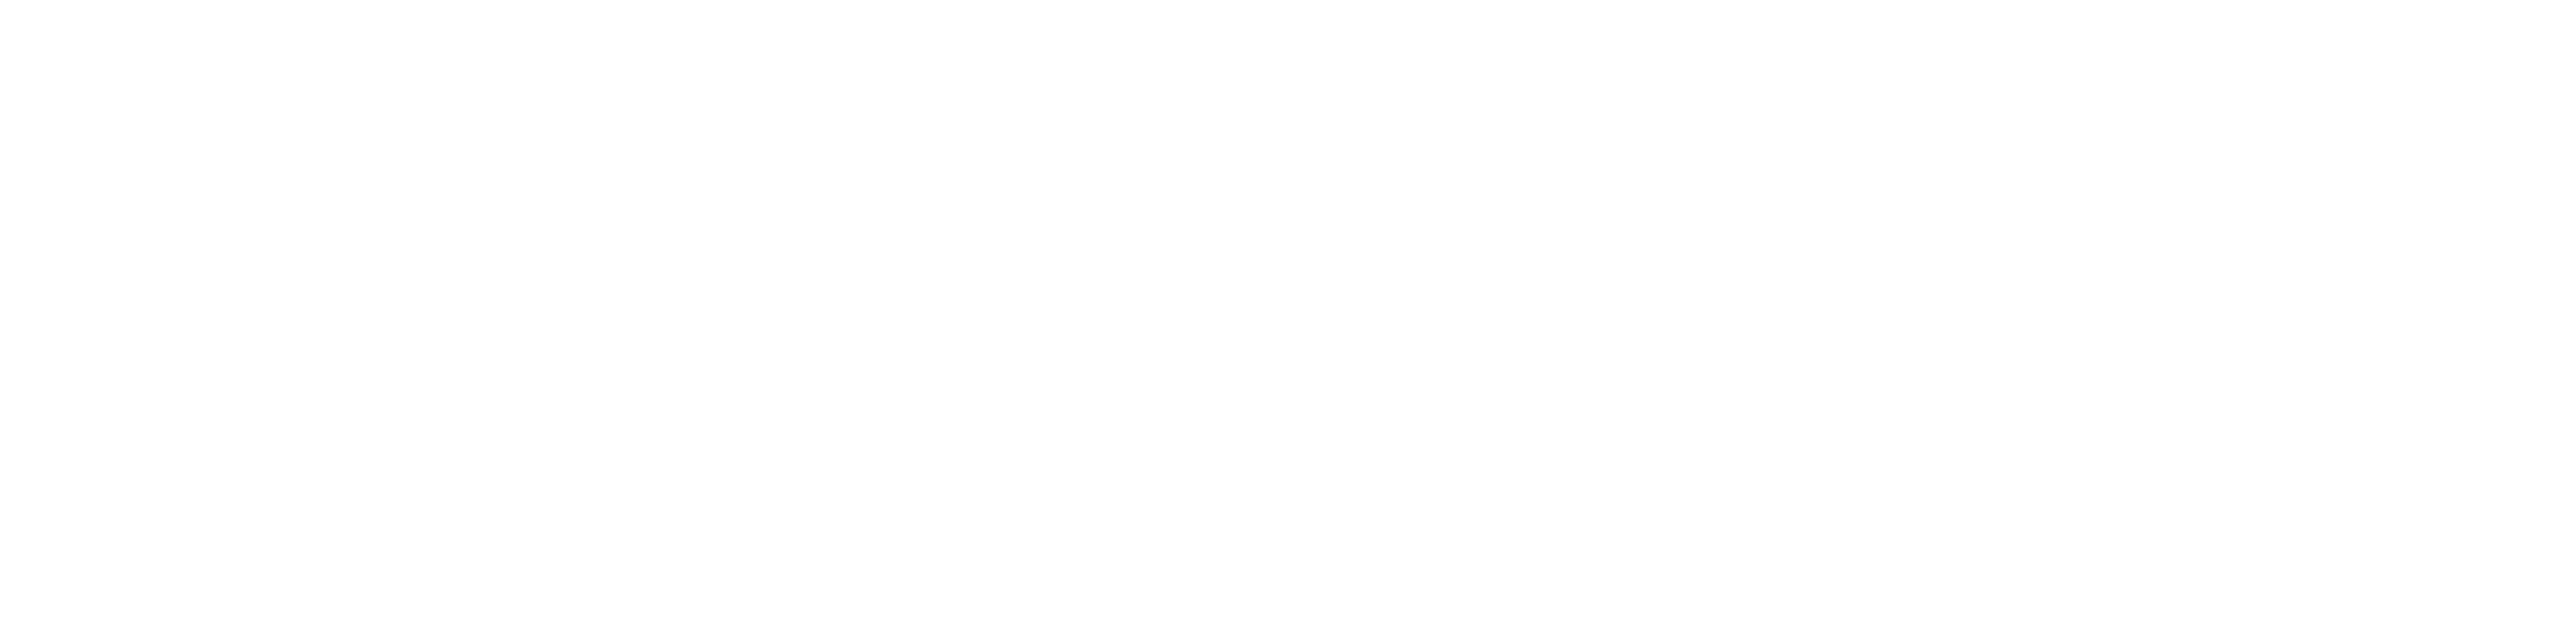 NBN Atlas